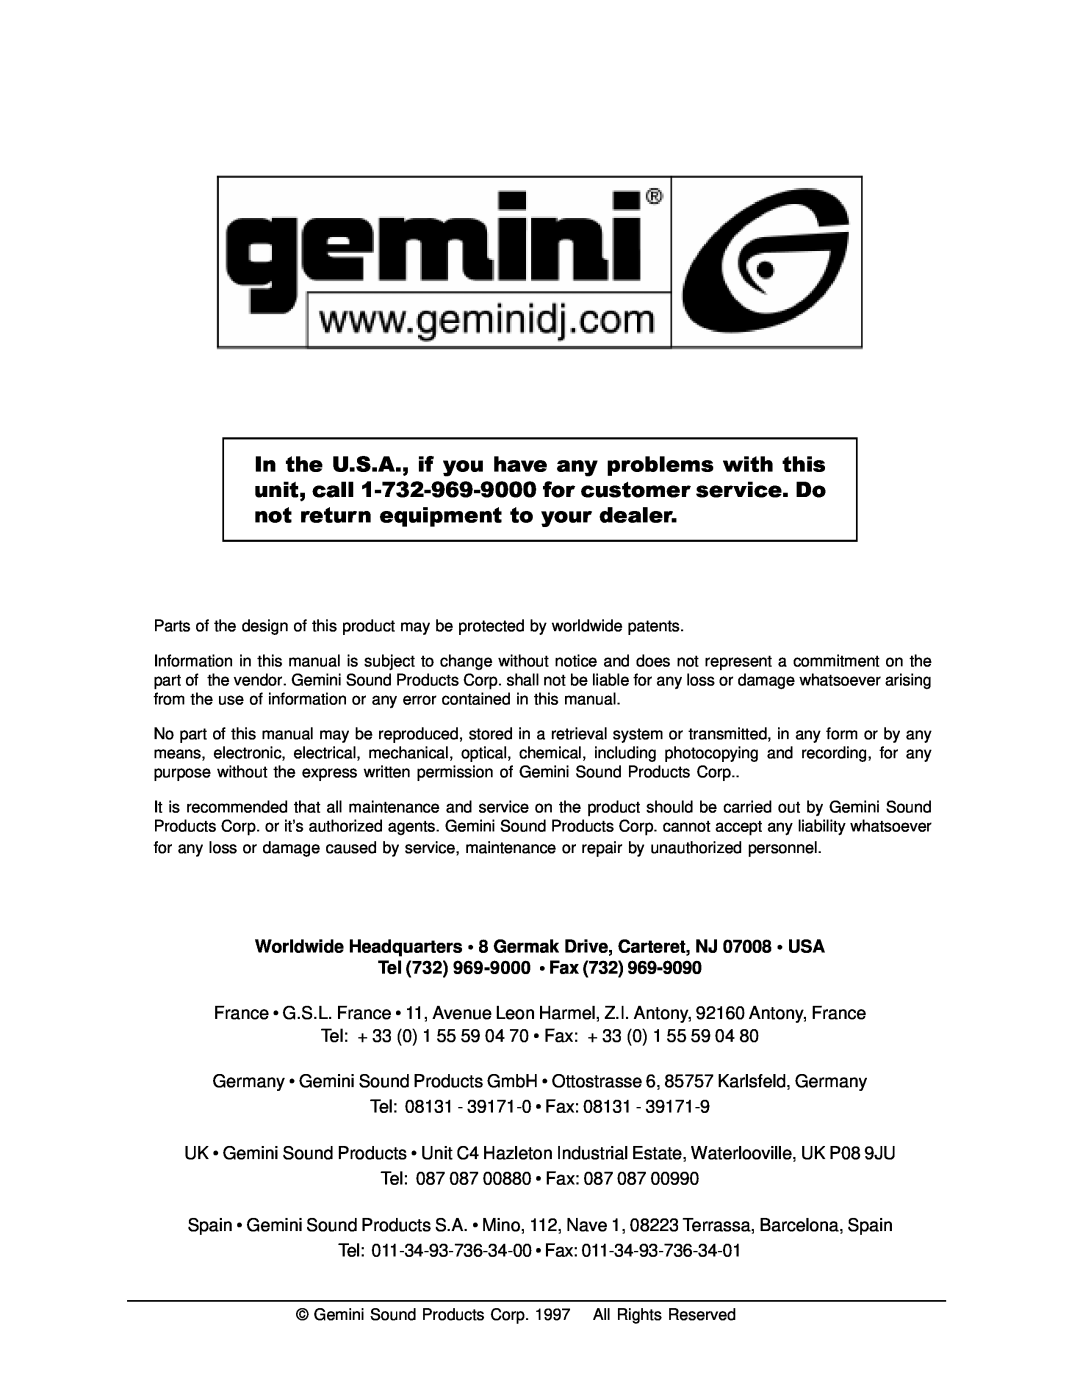 Gemini PS-924 manual Worldwide Headquarters 8 Germak Drive, Carteret, NJ 07008 USA, Tel 732 969-9000 Fax 732 